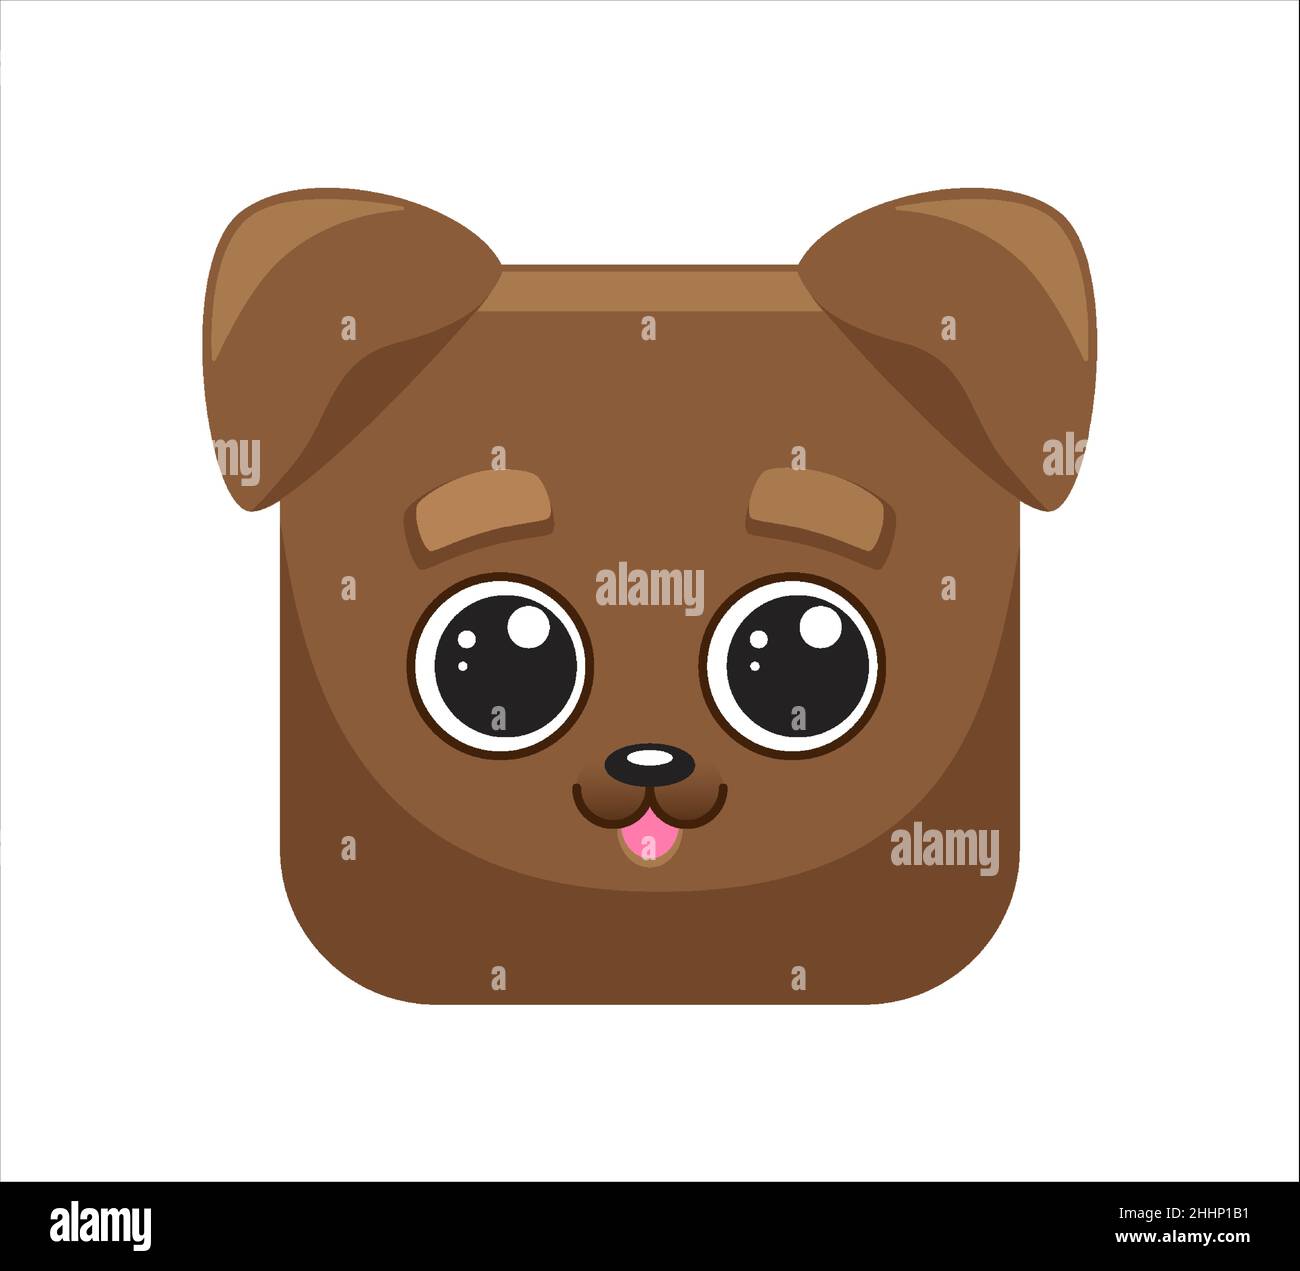 Lustige braunen Hund, Welpen, Tier quadratische Gesichter, Maske, Symbol, Logo Vektor Illustration Cartoon-Stil Stock Vektor